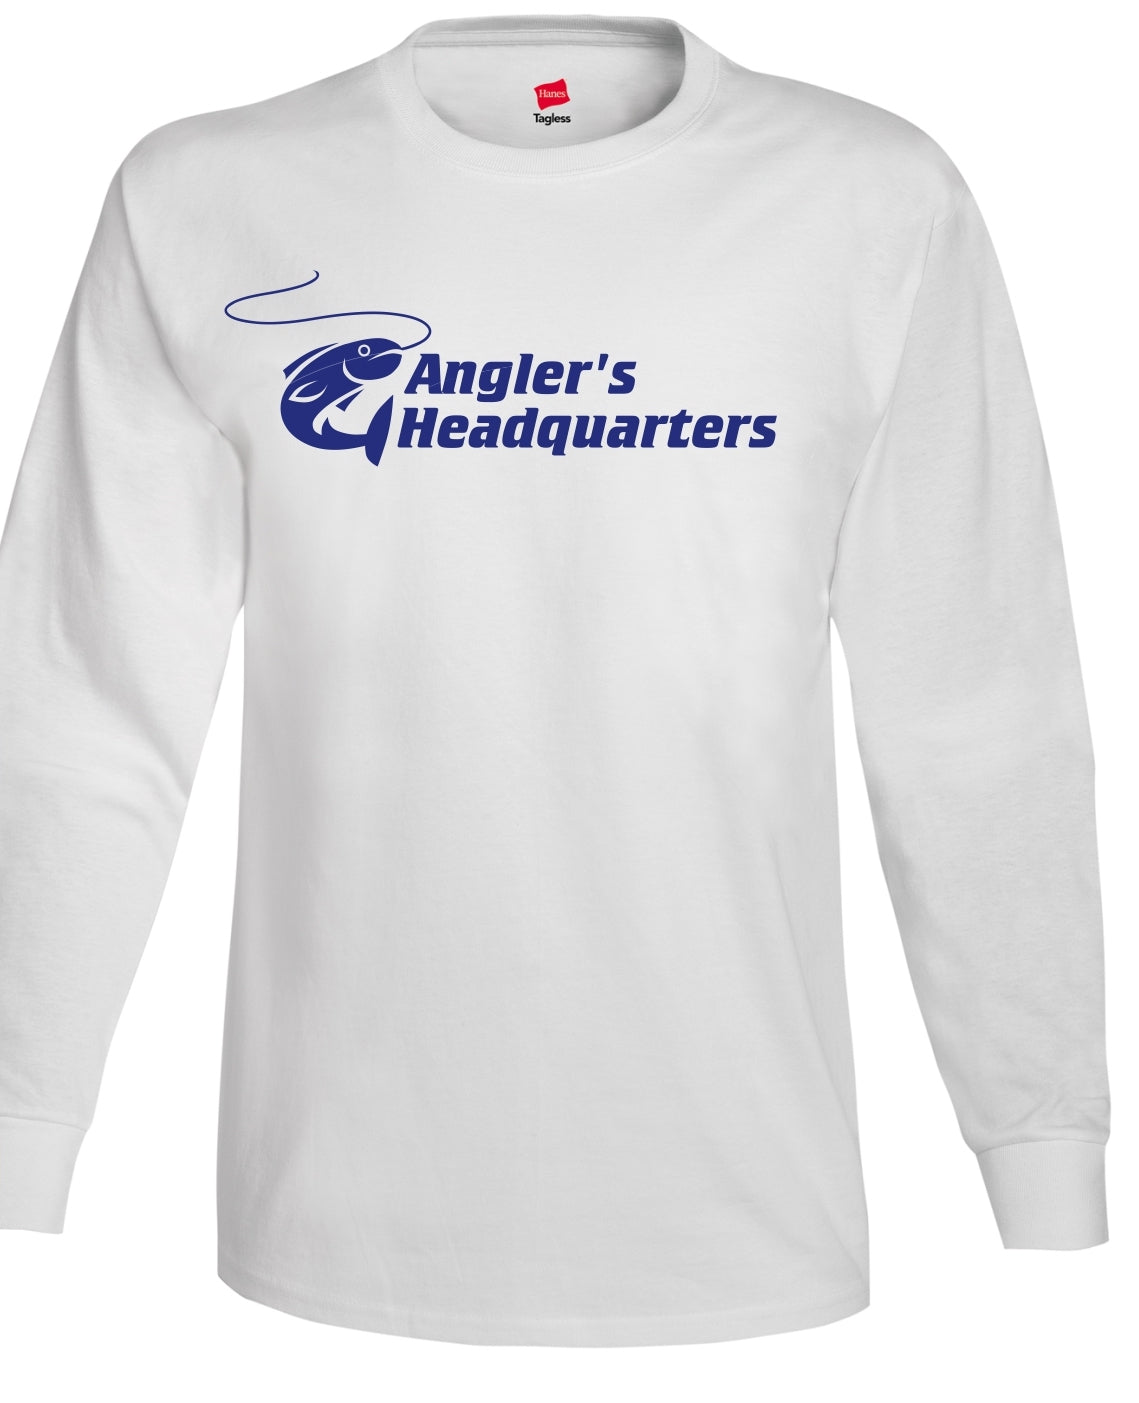 Accessories - Angler's Headquarters